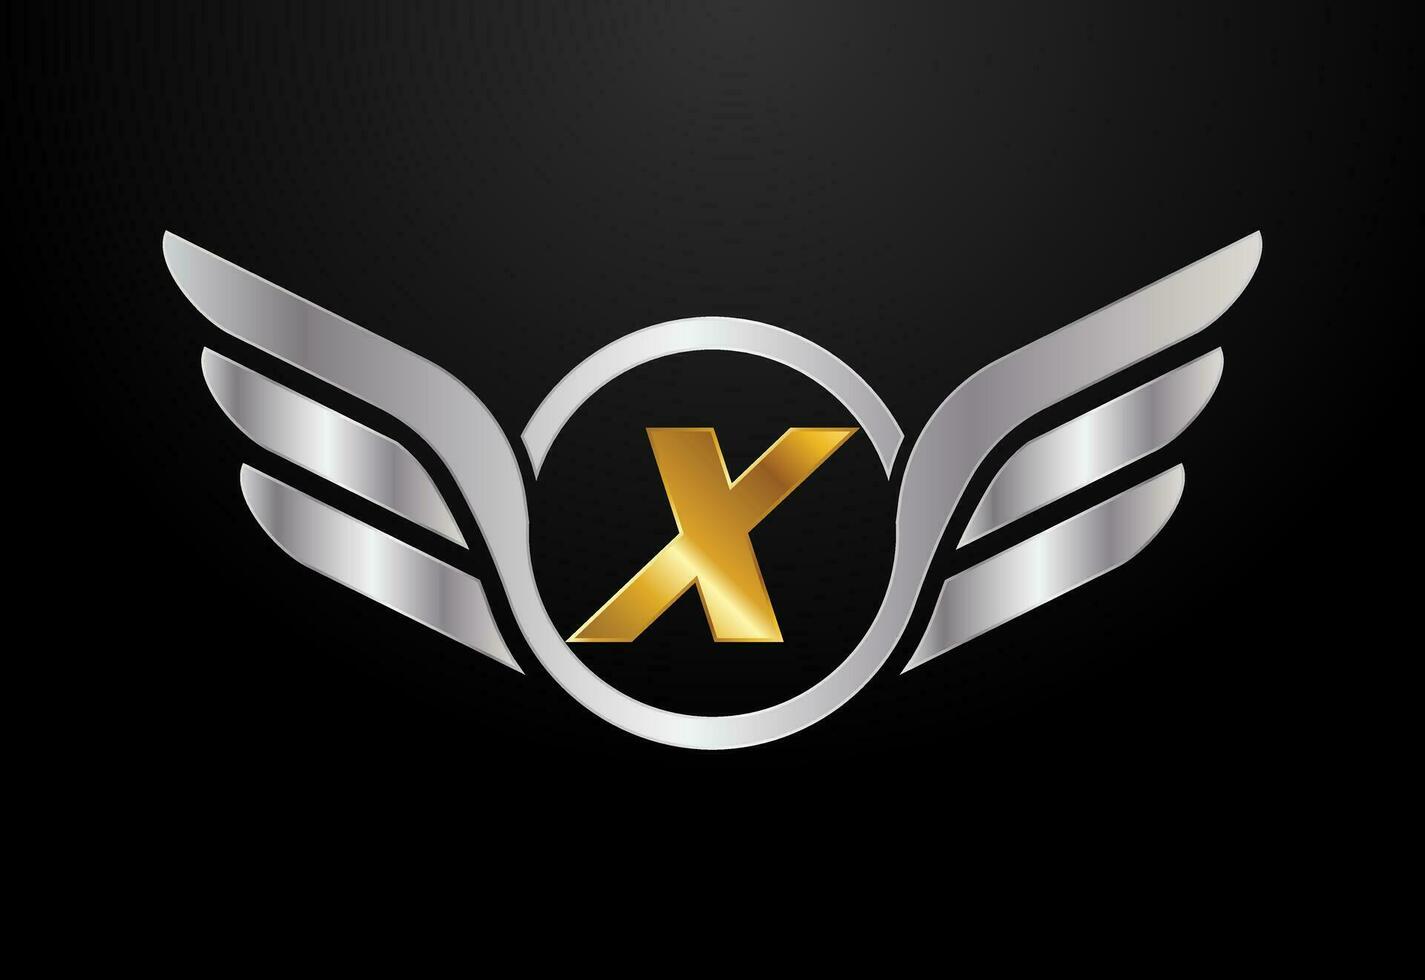 English alphabet X with wings logo design. Car and automotive vector logo concept